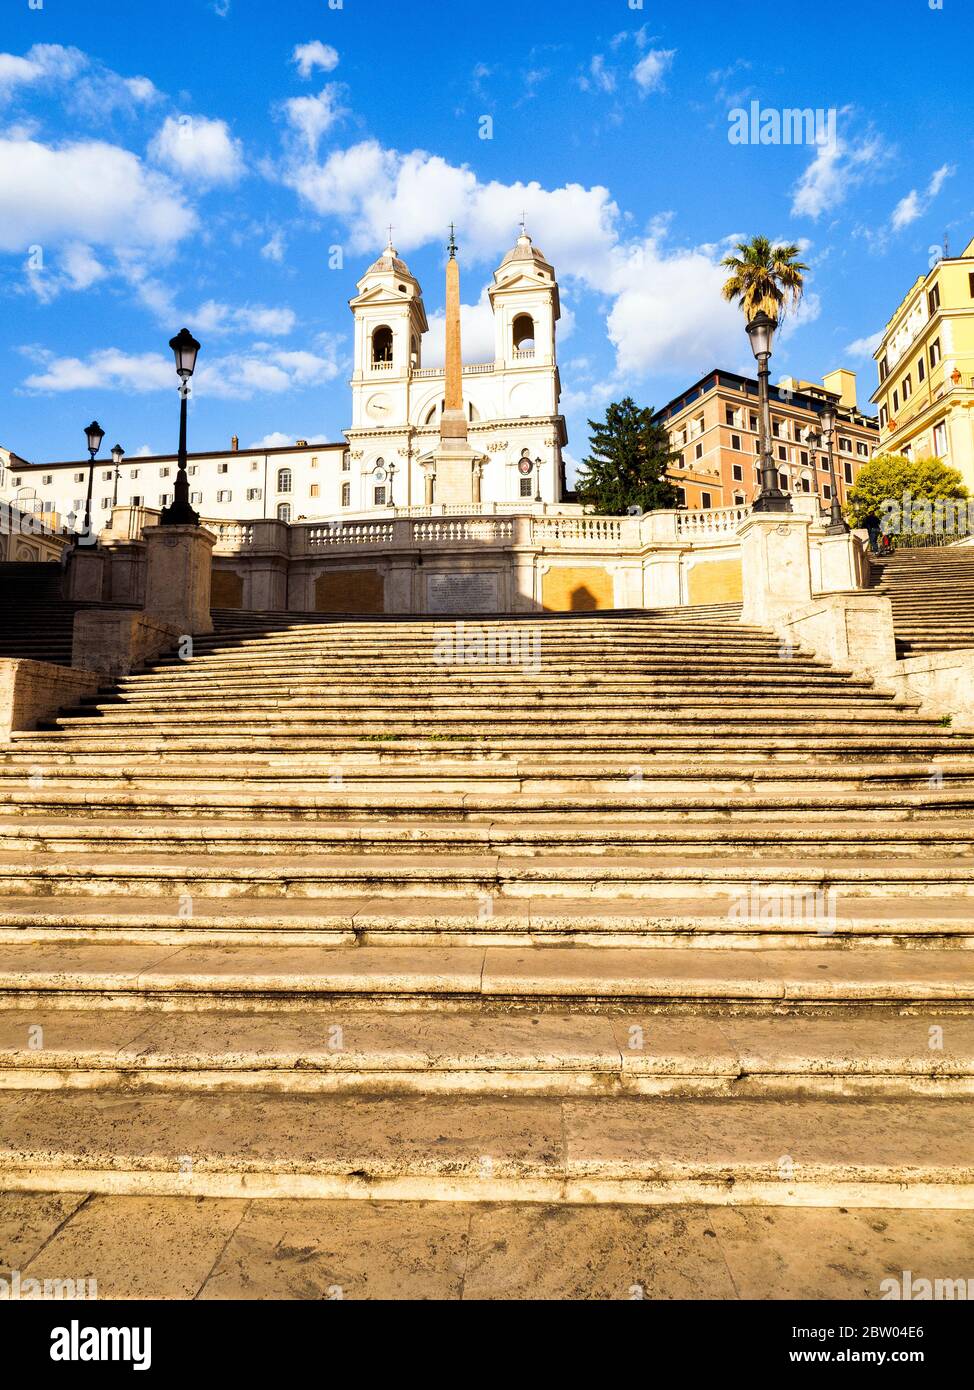 Spanish Steps (Scalinata di Trinità dei Monti) between Piazza di Spagna at the base and Piazza Trinità dei Monti, dominated by the Trinità dei Monti church at the top - Rome, Italy Stock Photo